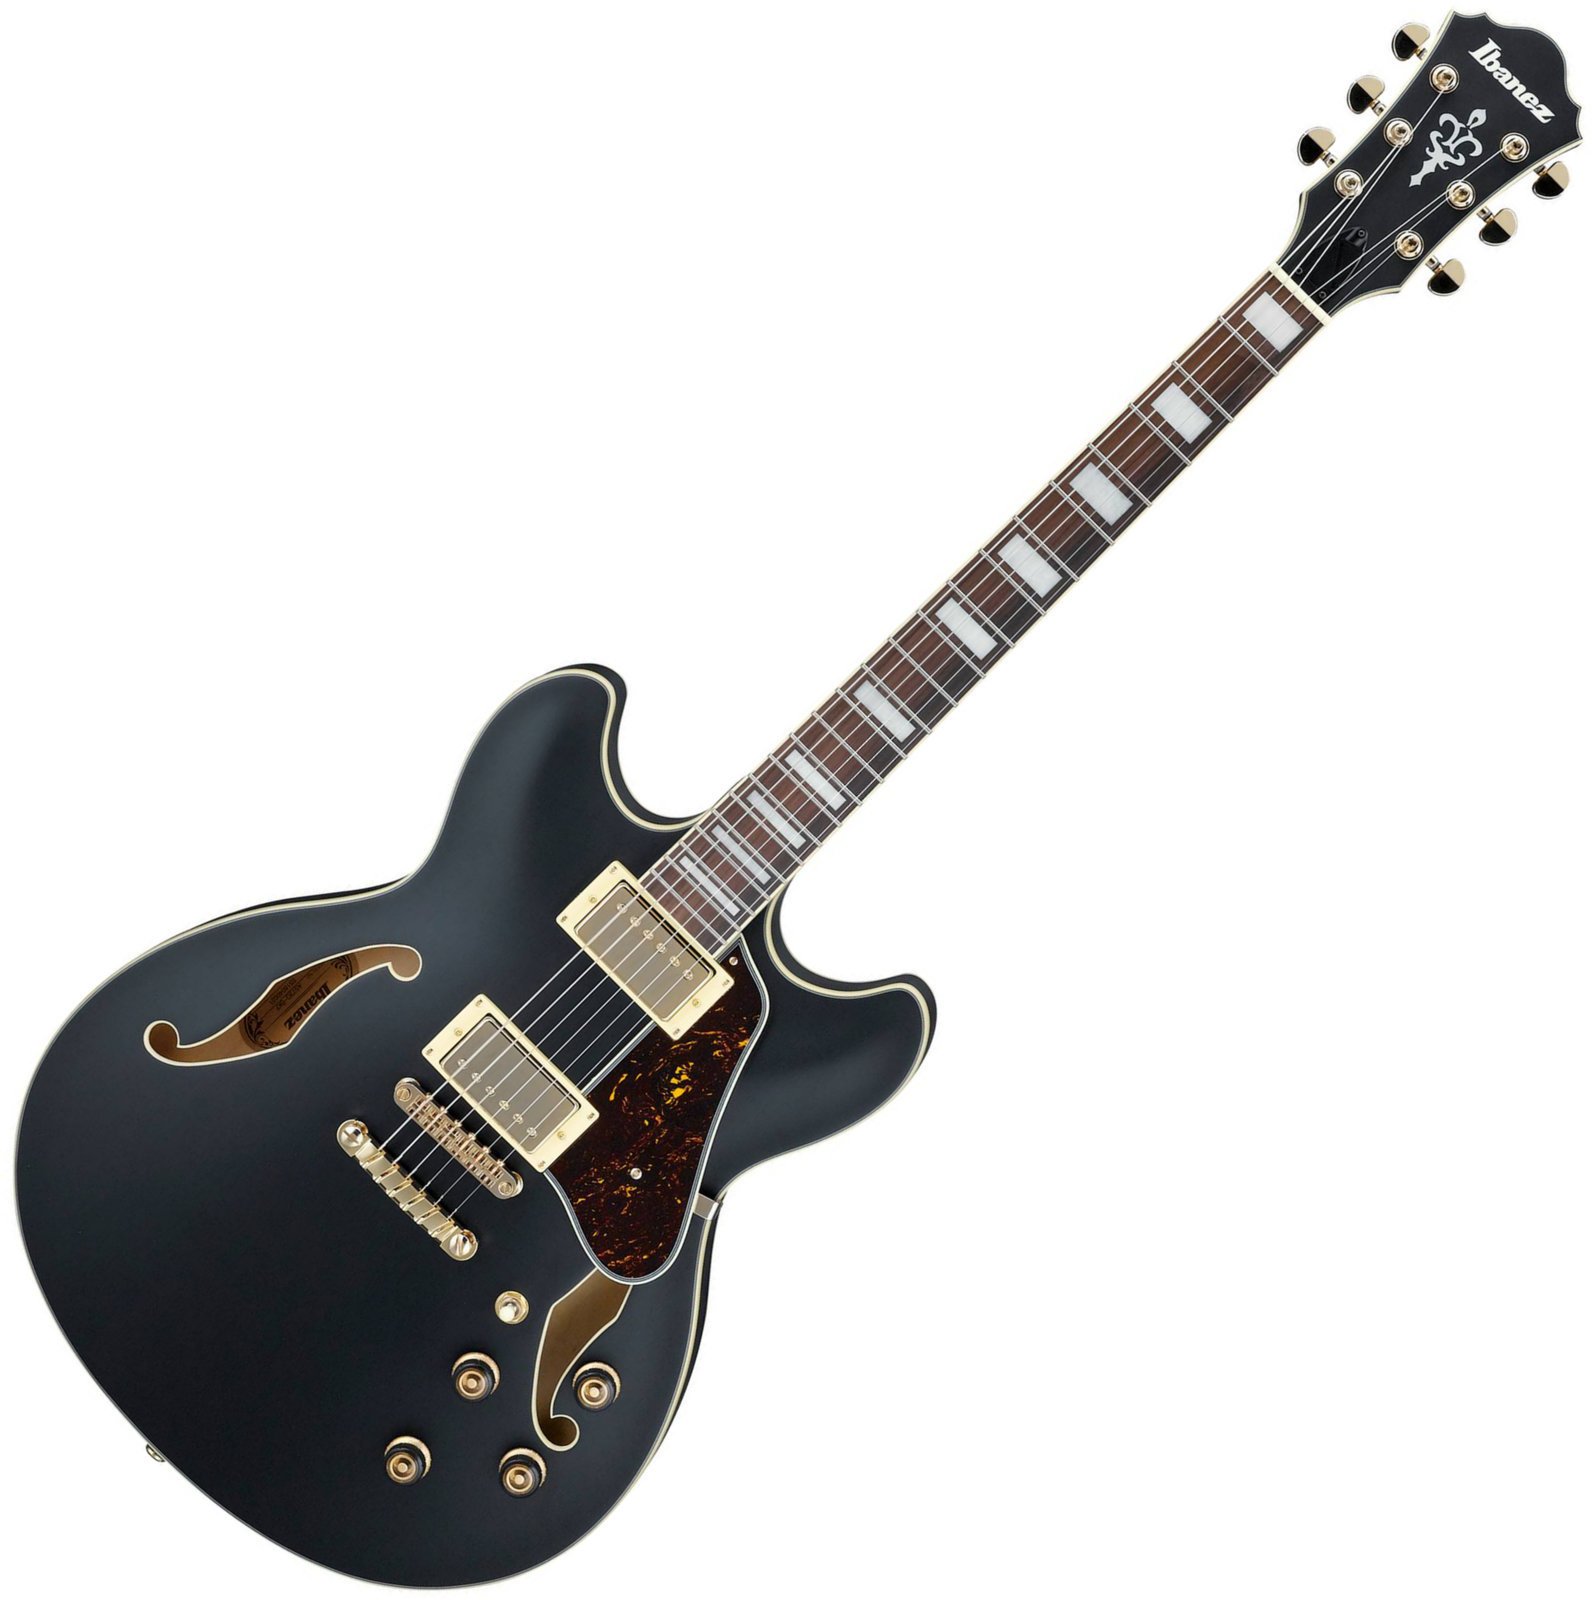 Semiakustická kytara Ibanez AS73G Black Fade